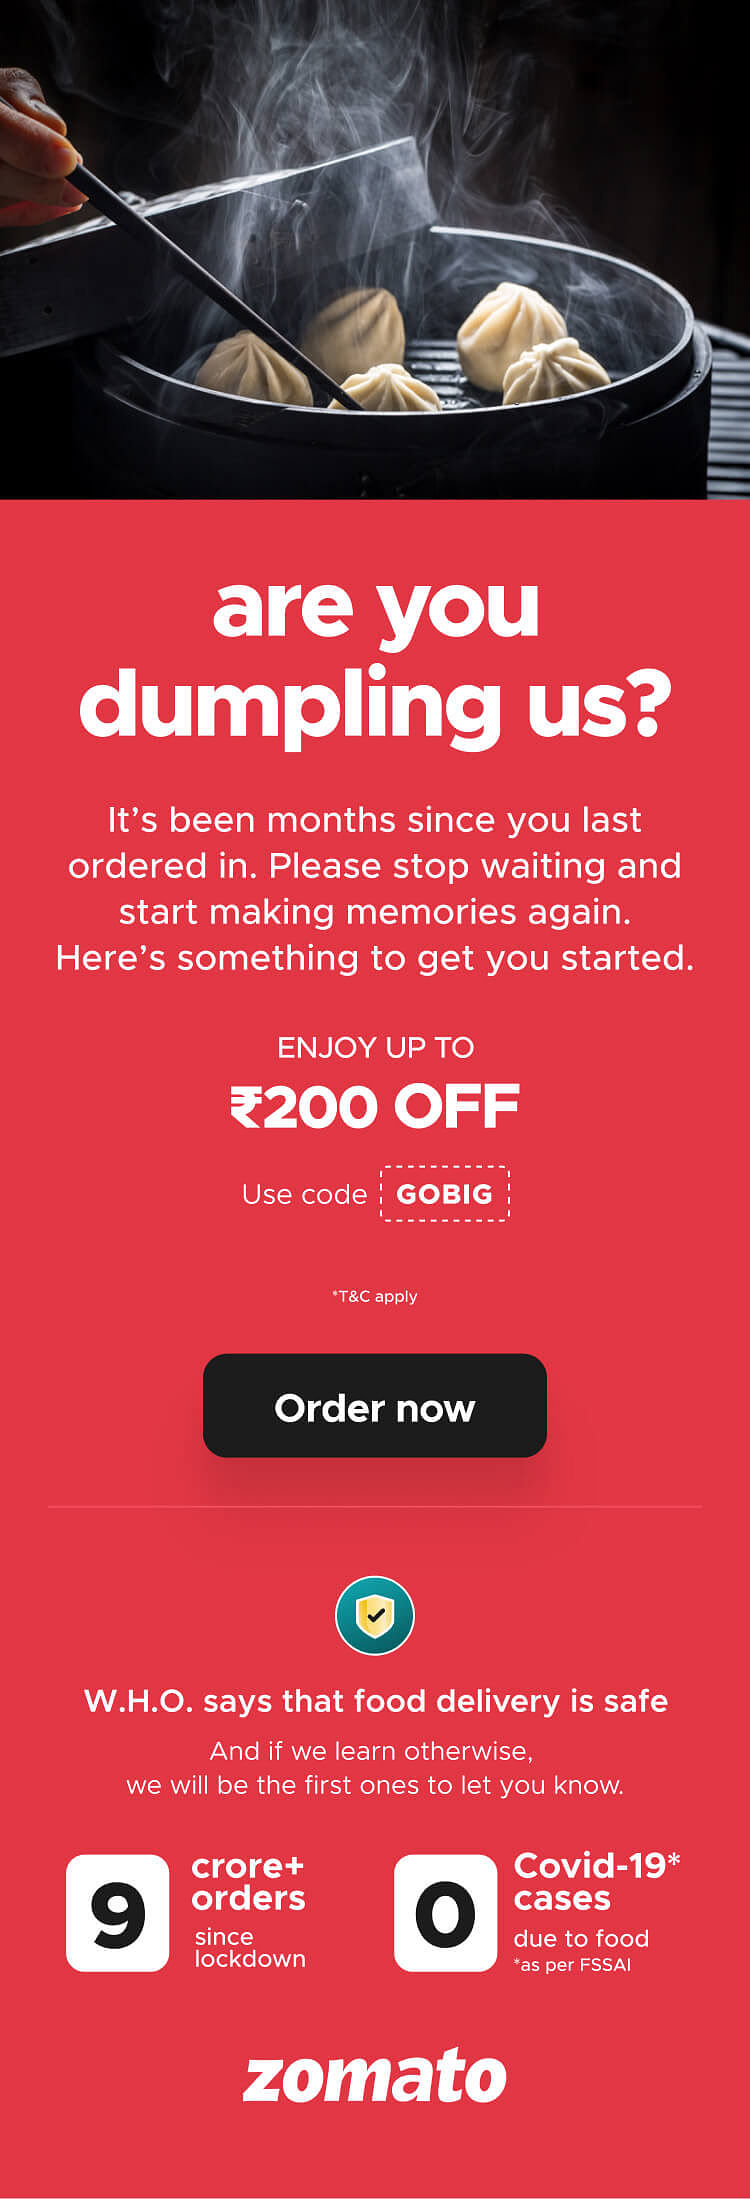 Zomato mailers invite users to order again...